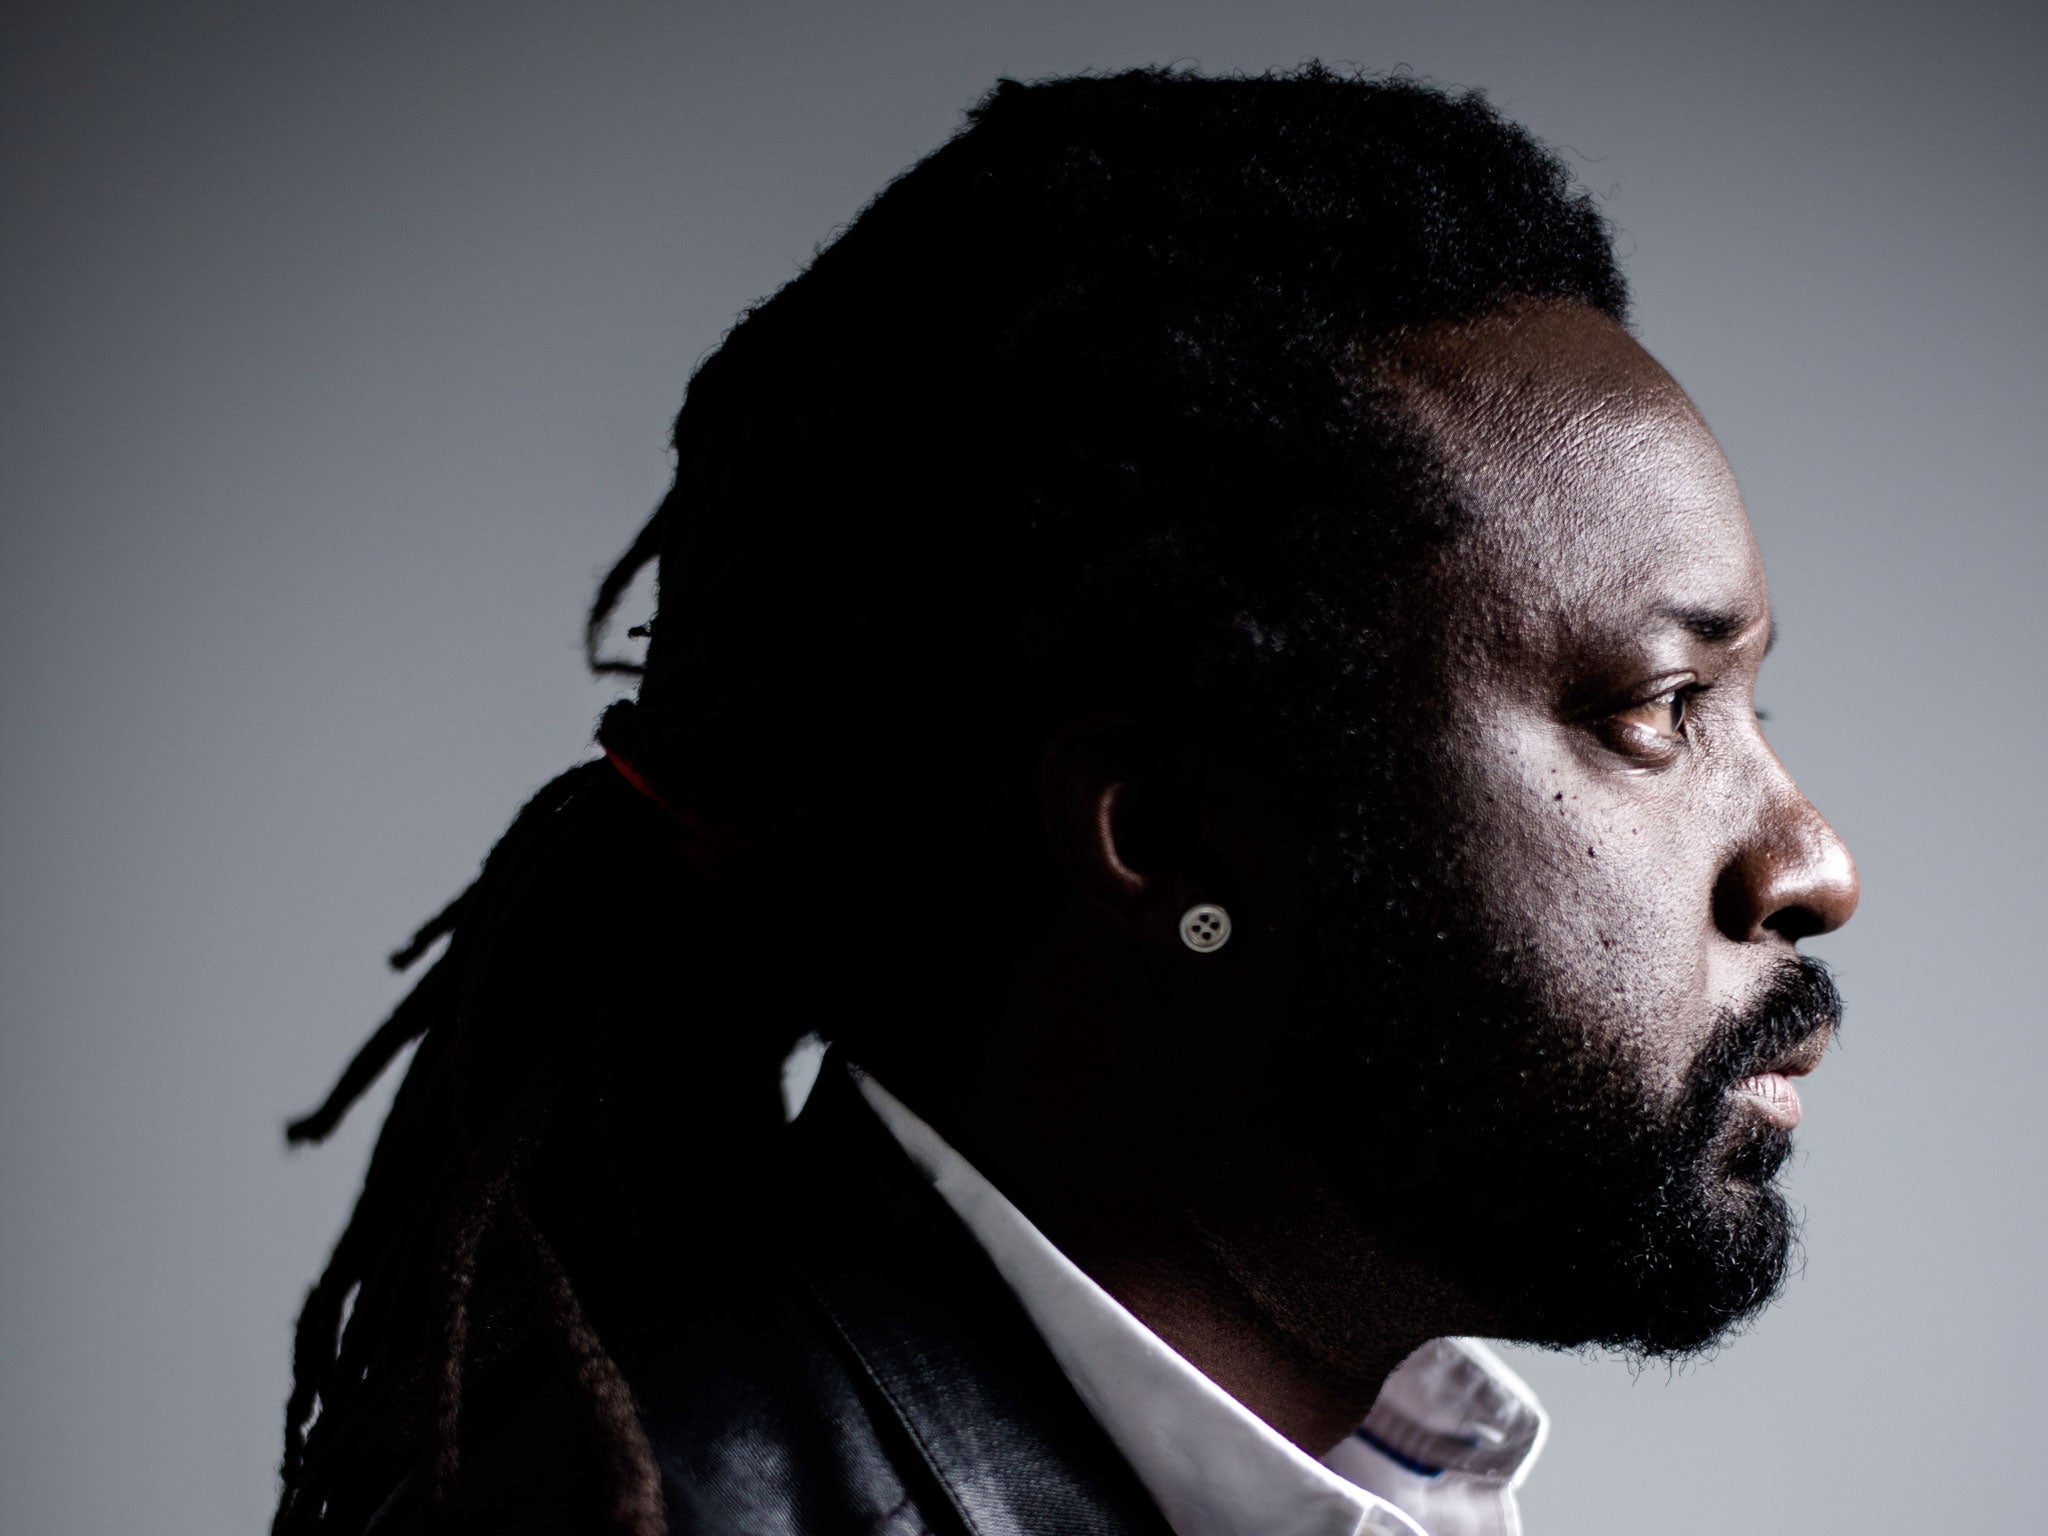 Making another killing: Marlon James